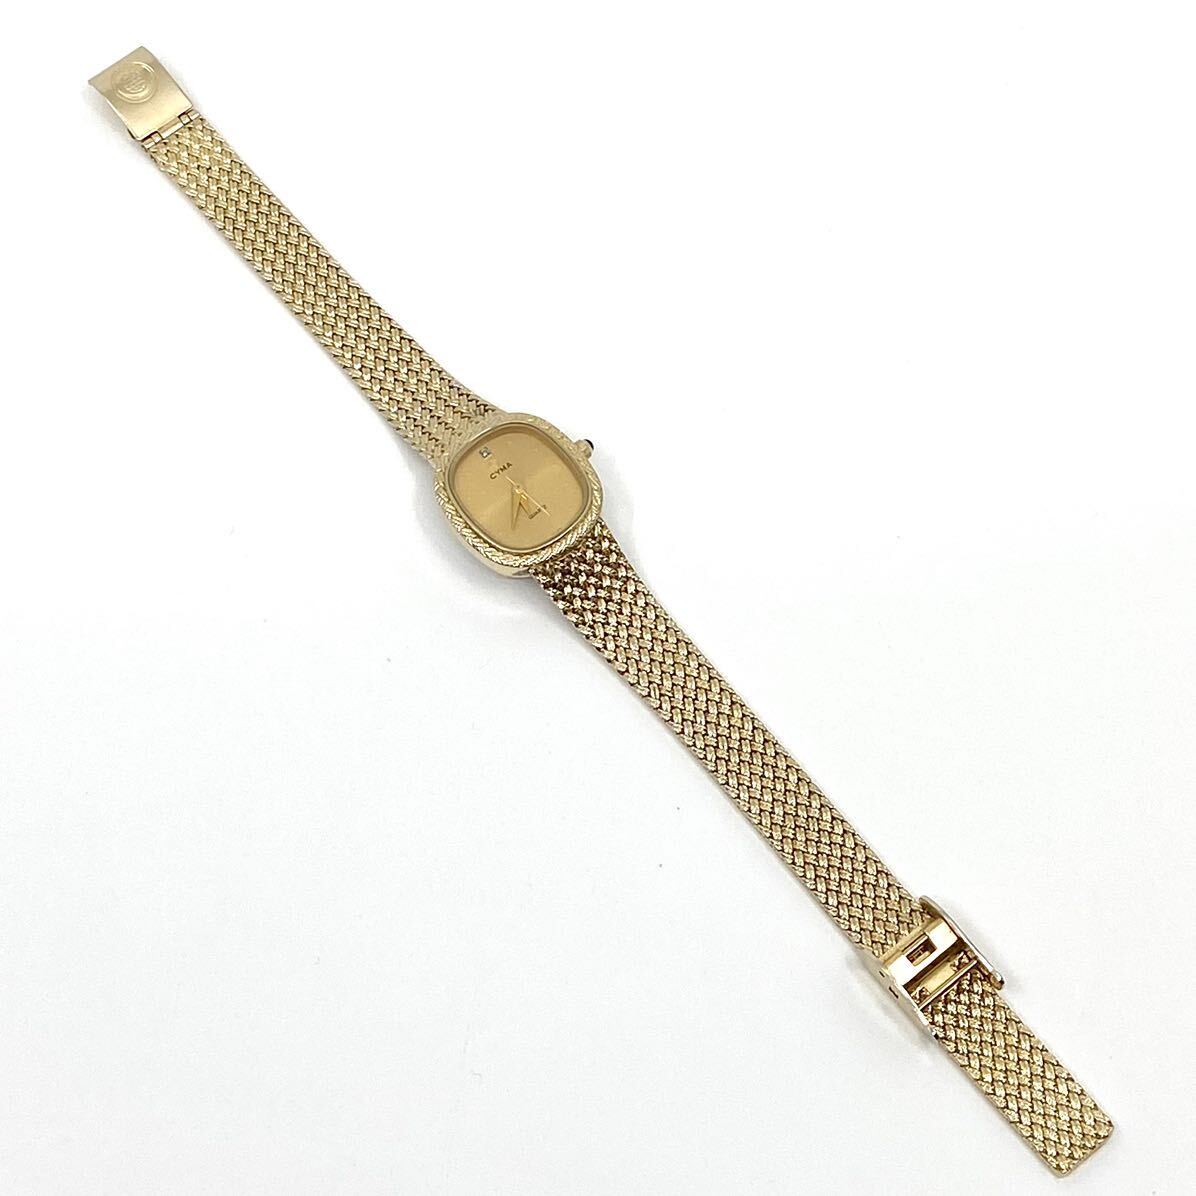 CYMA 腕時計 ドットインデックス 3針 クォーツ quartz Swiss ゴールド文字盤 金 シーマ Y814